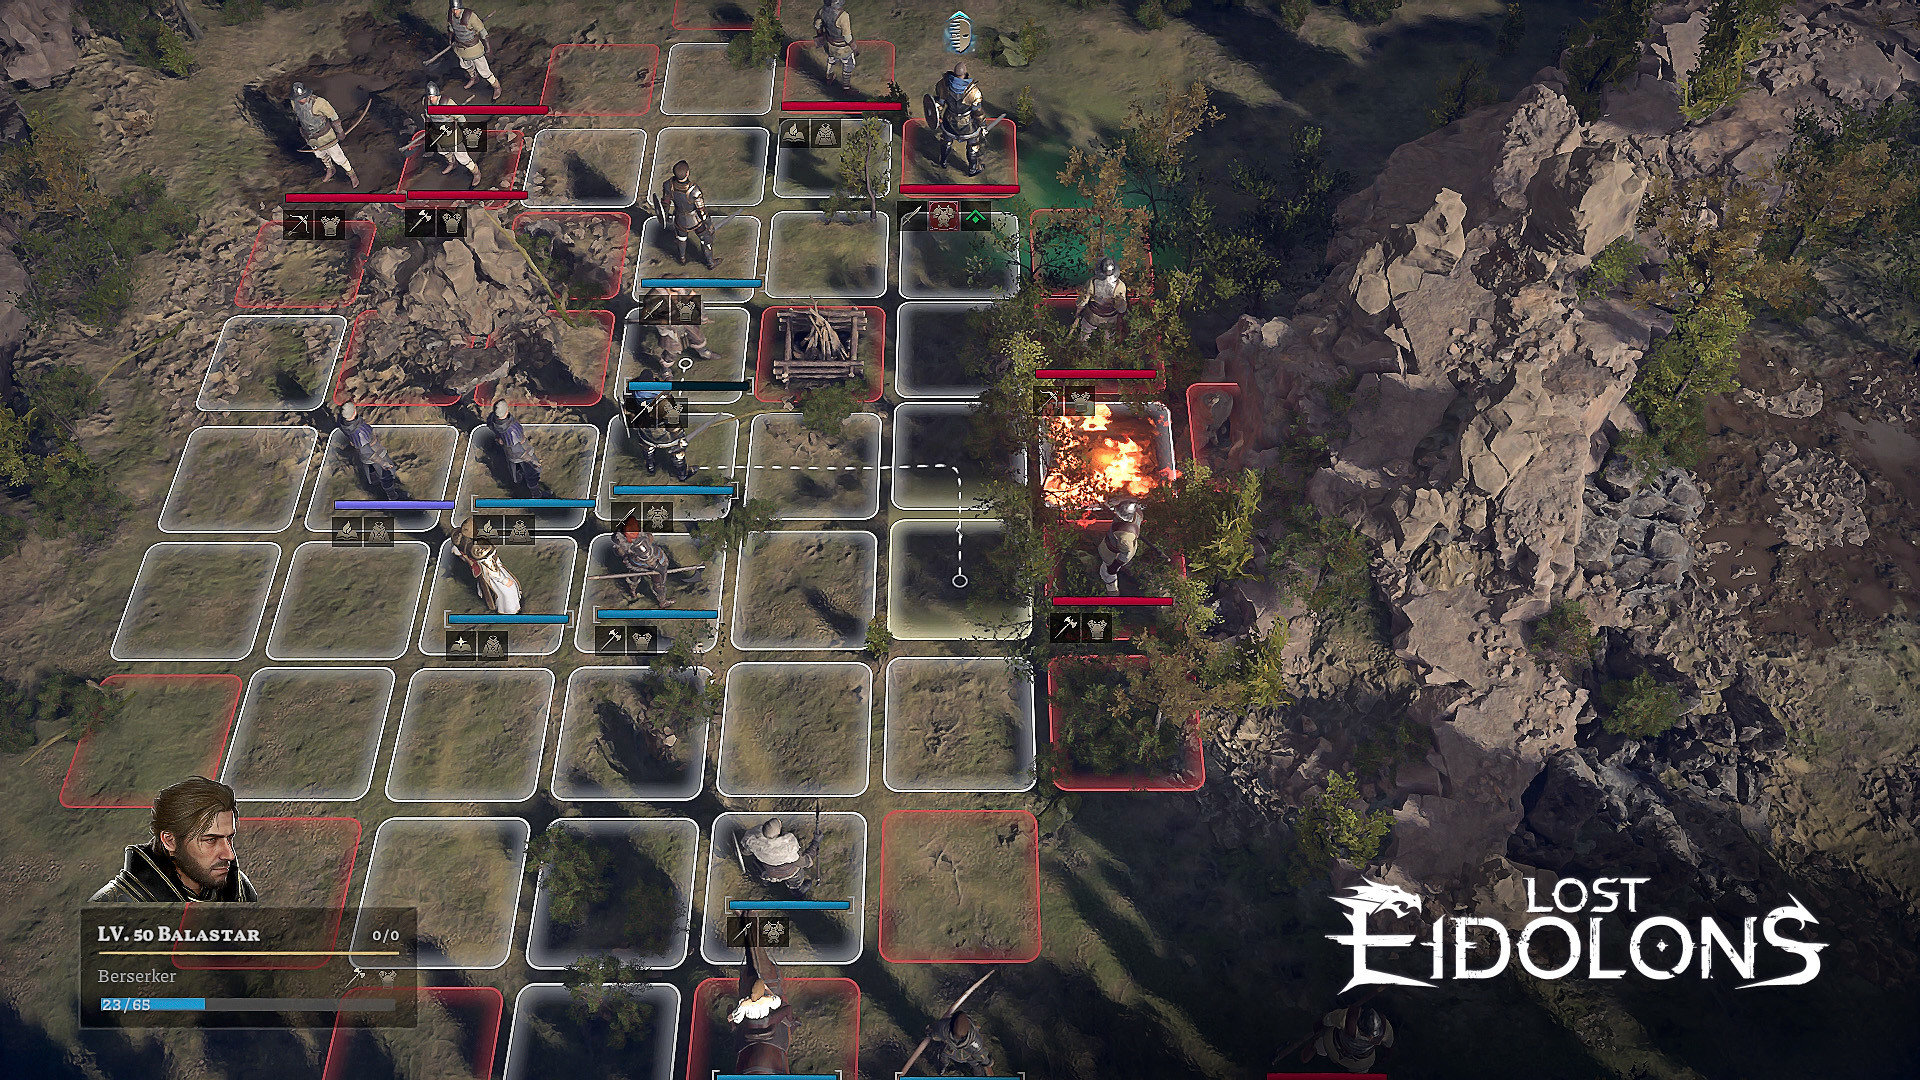 Lost Eidolons screenshot showing off the turn-based combat mechanics.